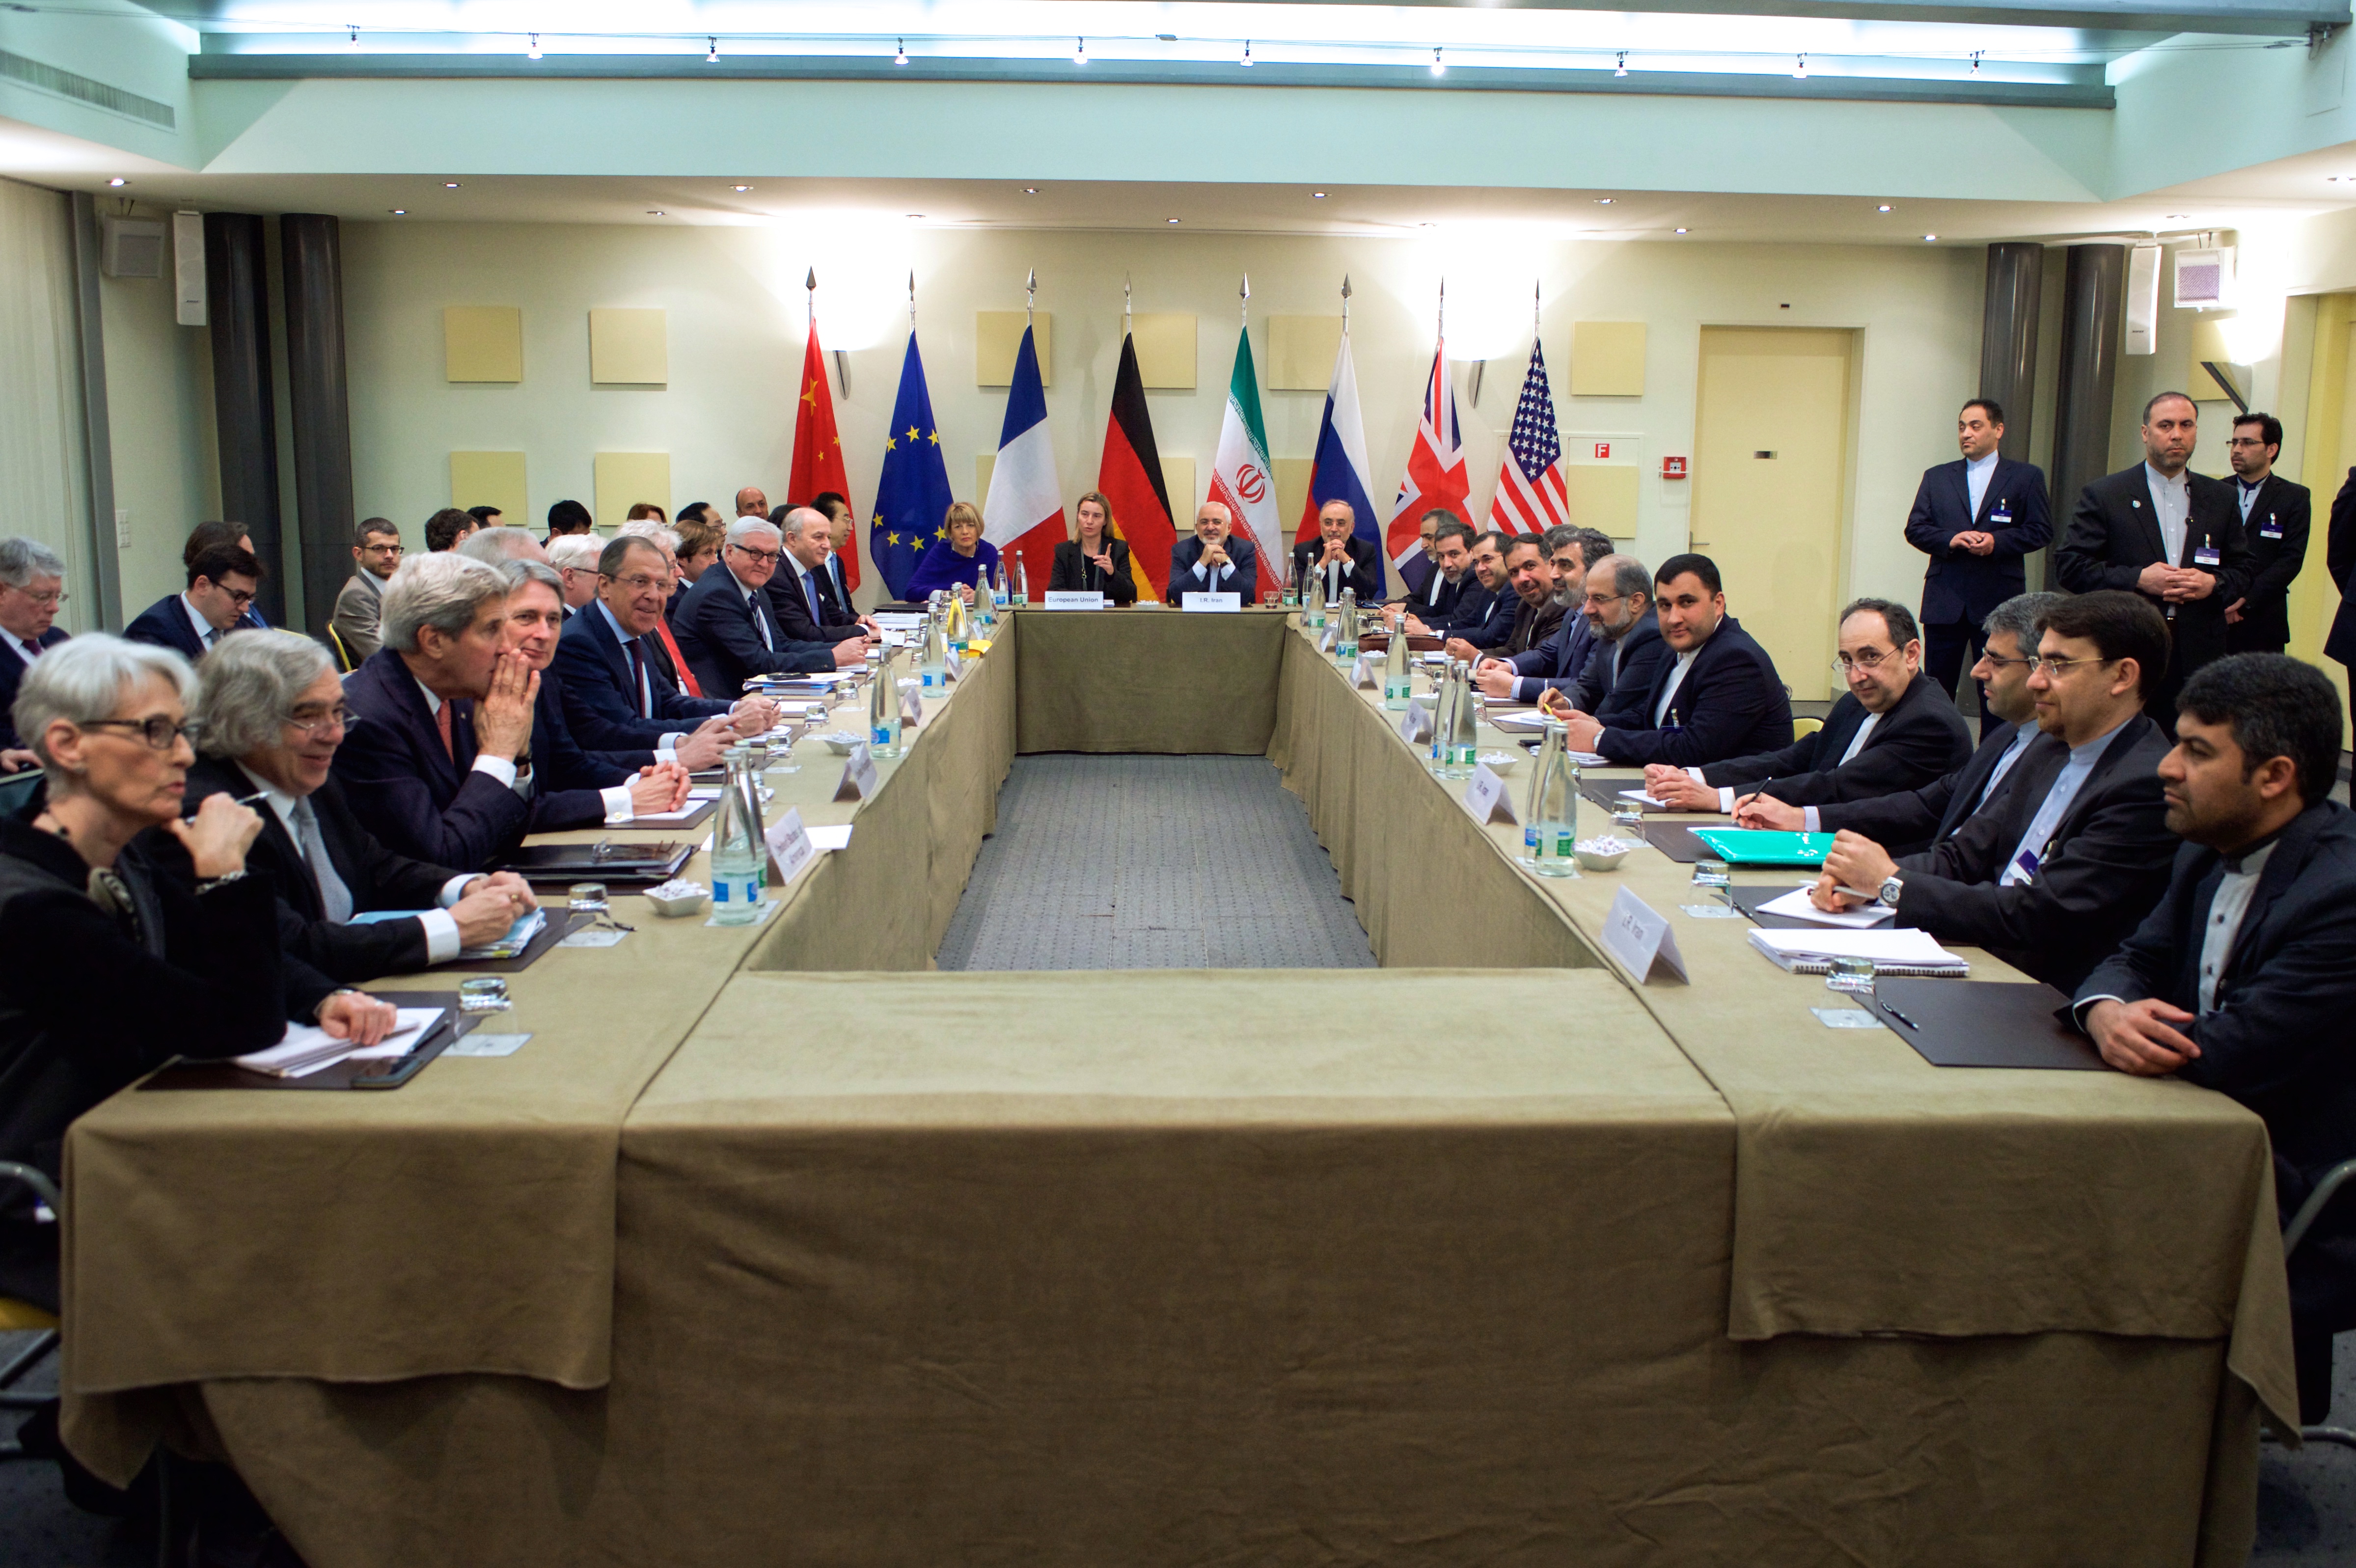 Negotiations on Iran Nuclear Program